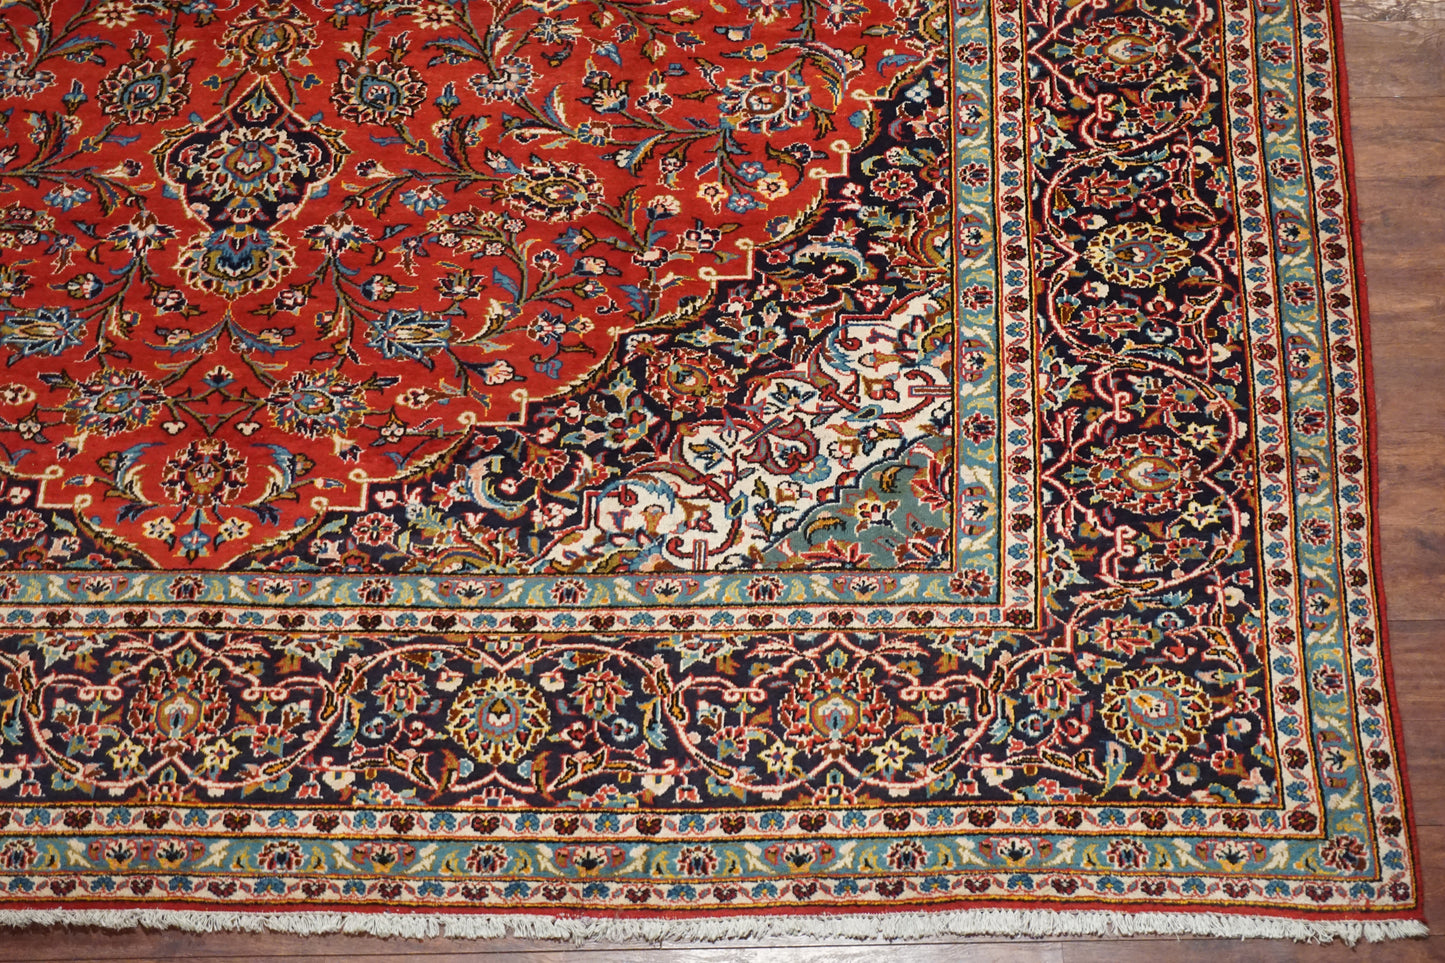 11X14 Antique Persian Kashan Rug, circa 1940